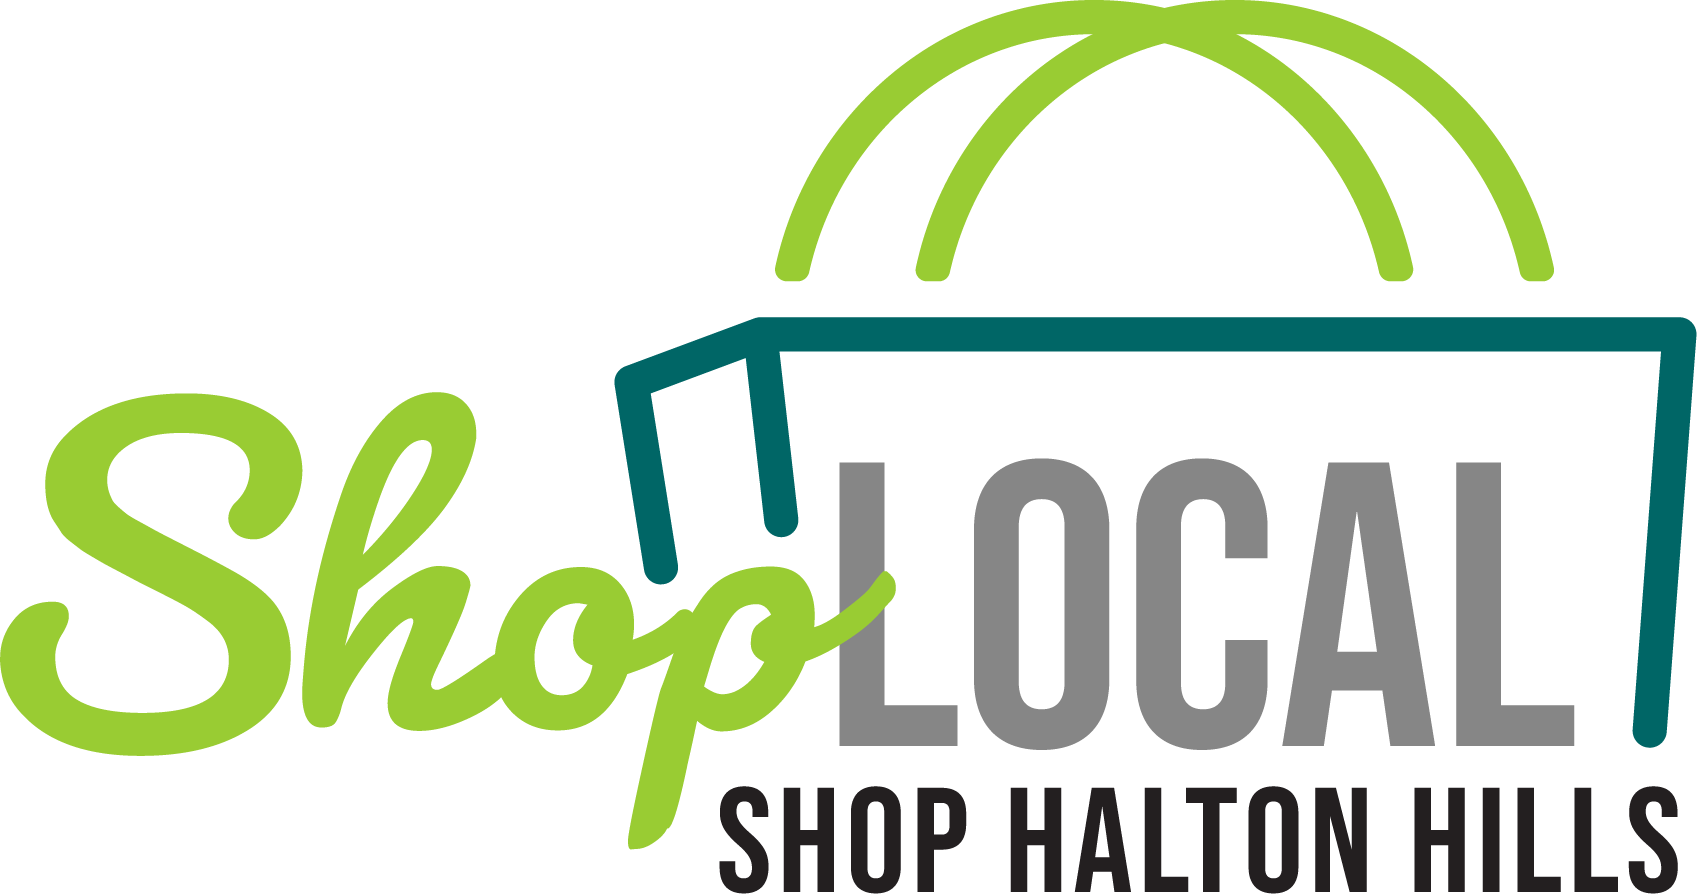 Shop Local Shop Halton Hills